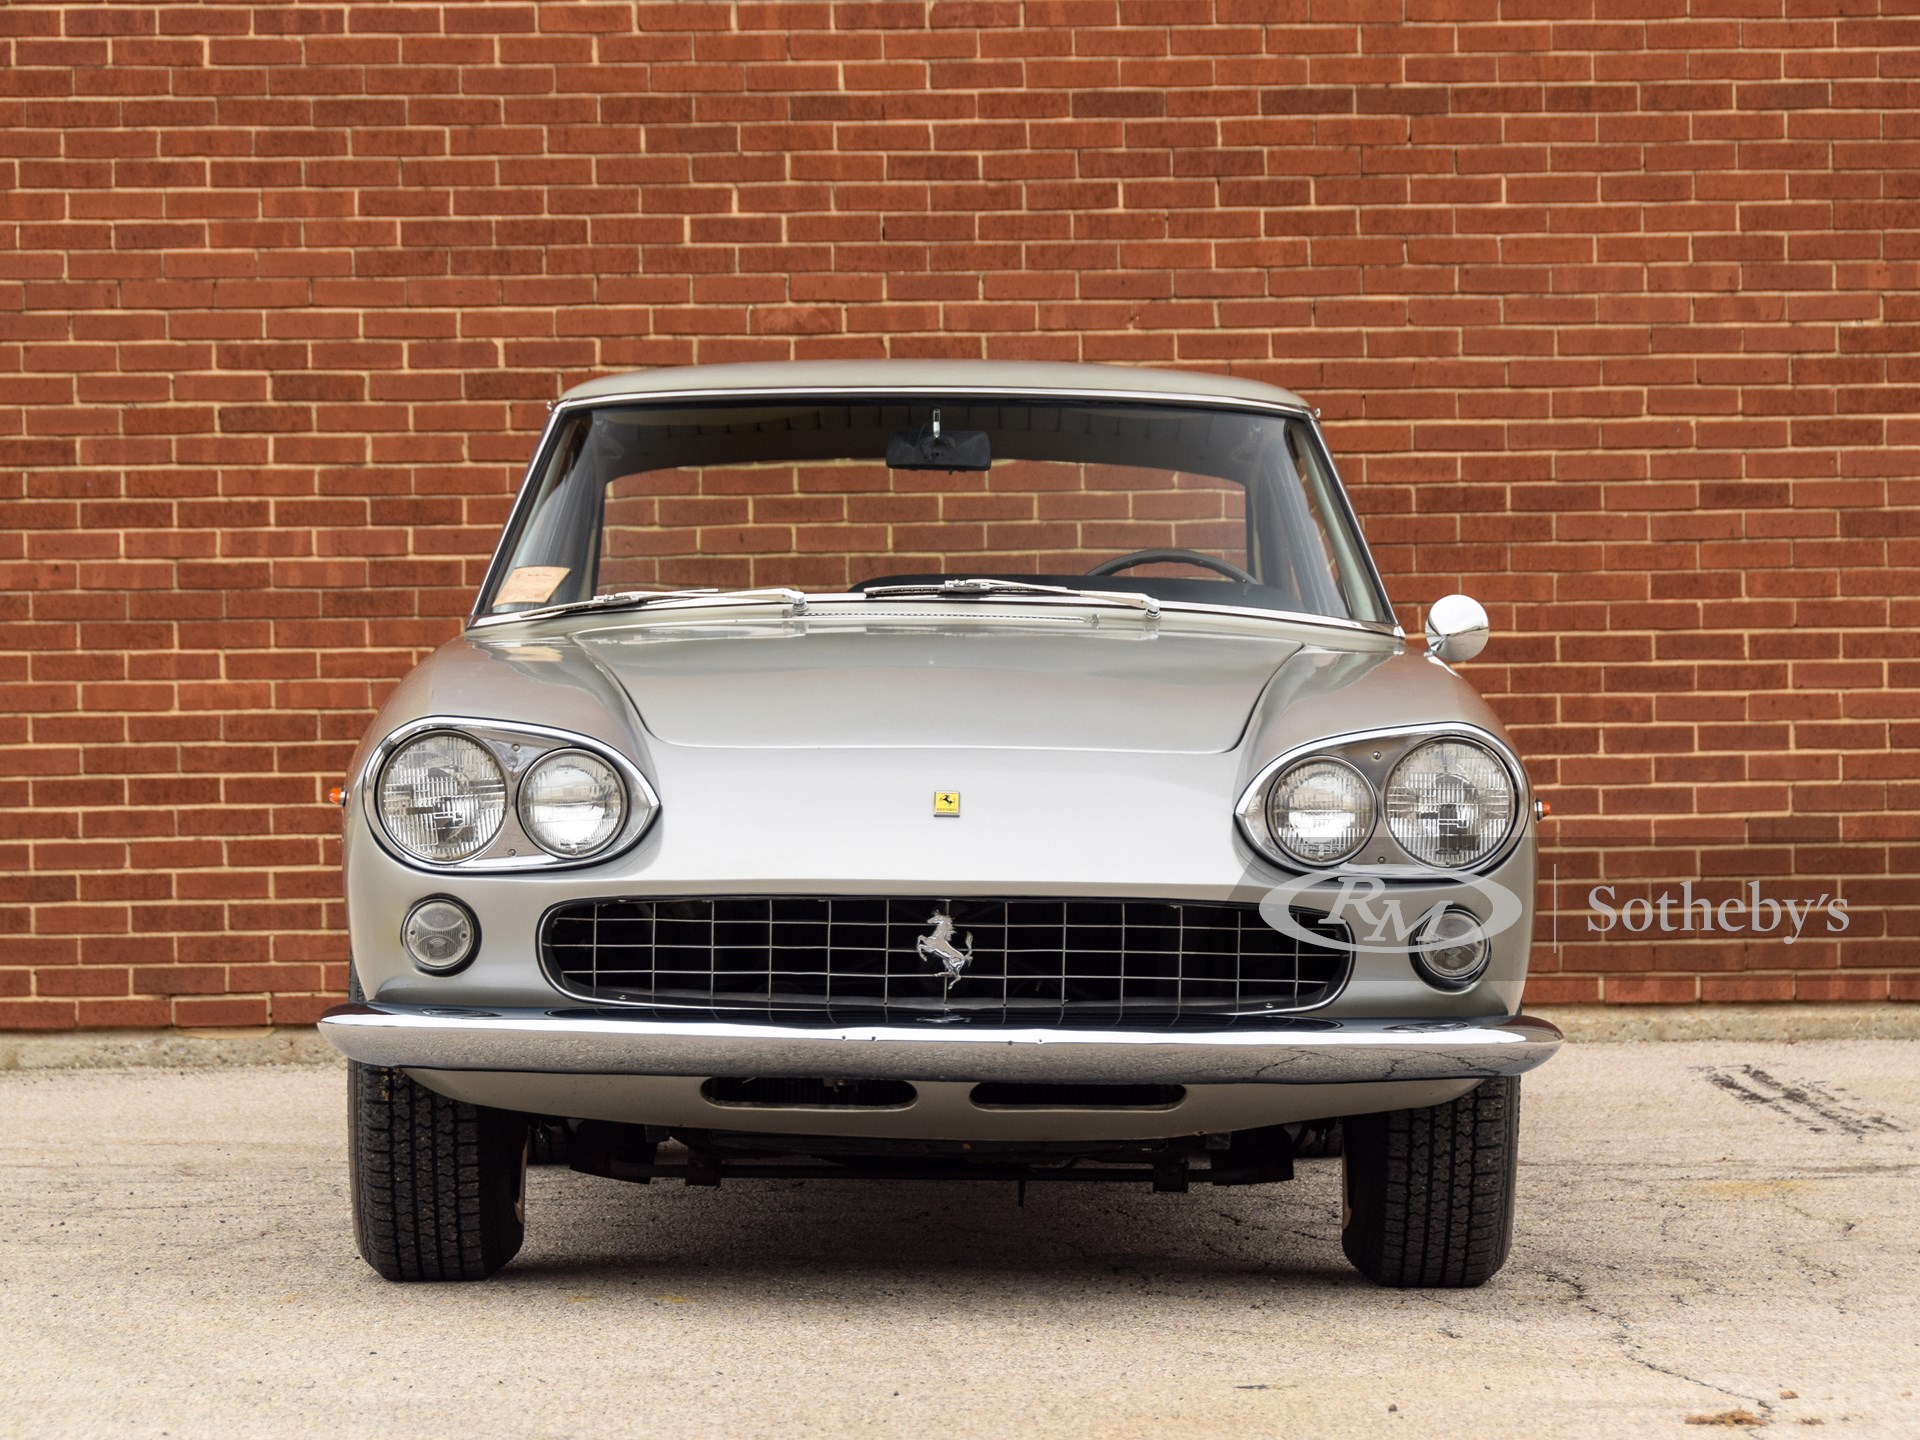 1964 Ferrari 330 Gt 22 Series I By Pininfarina Fort Lauderdale 2019